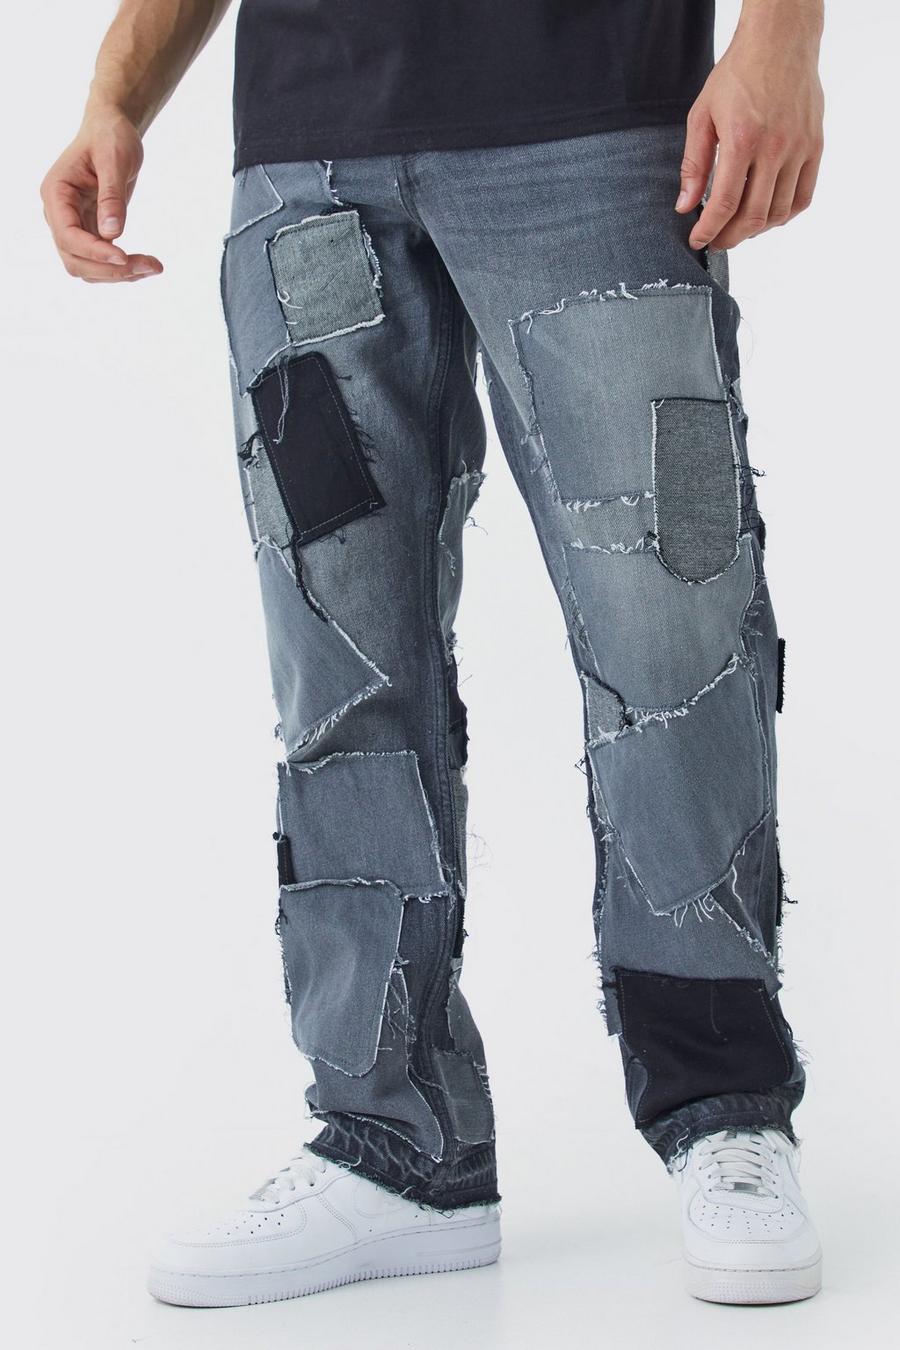 Lockere zerrissene Patchwork Jeans, Charcoal